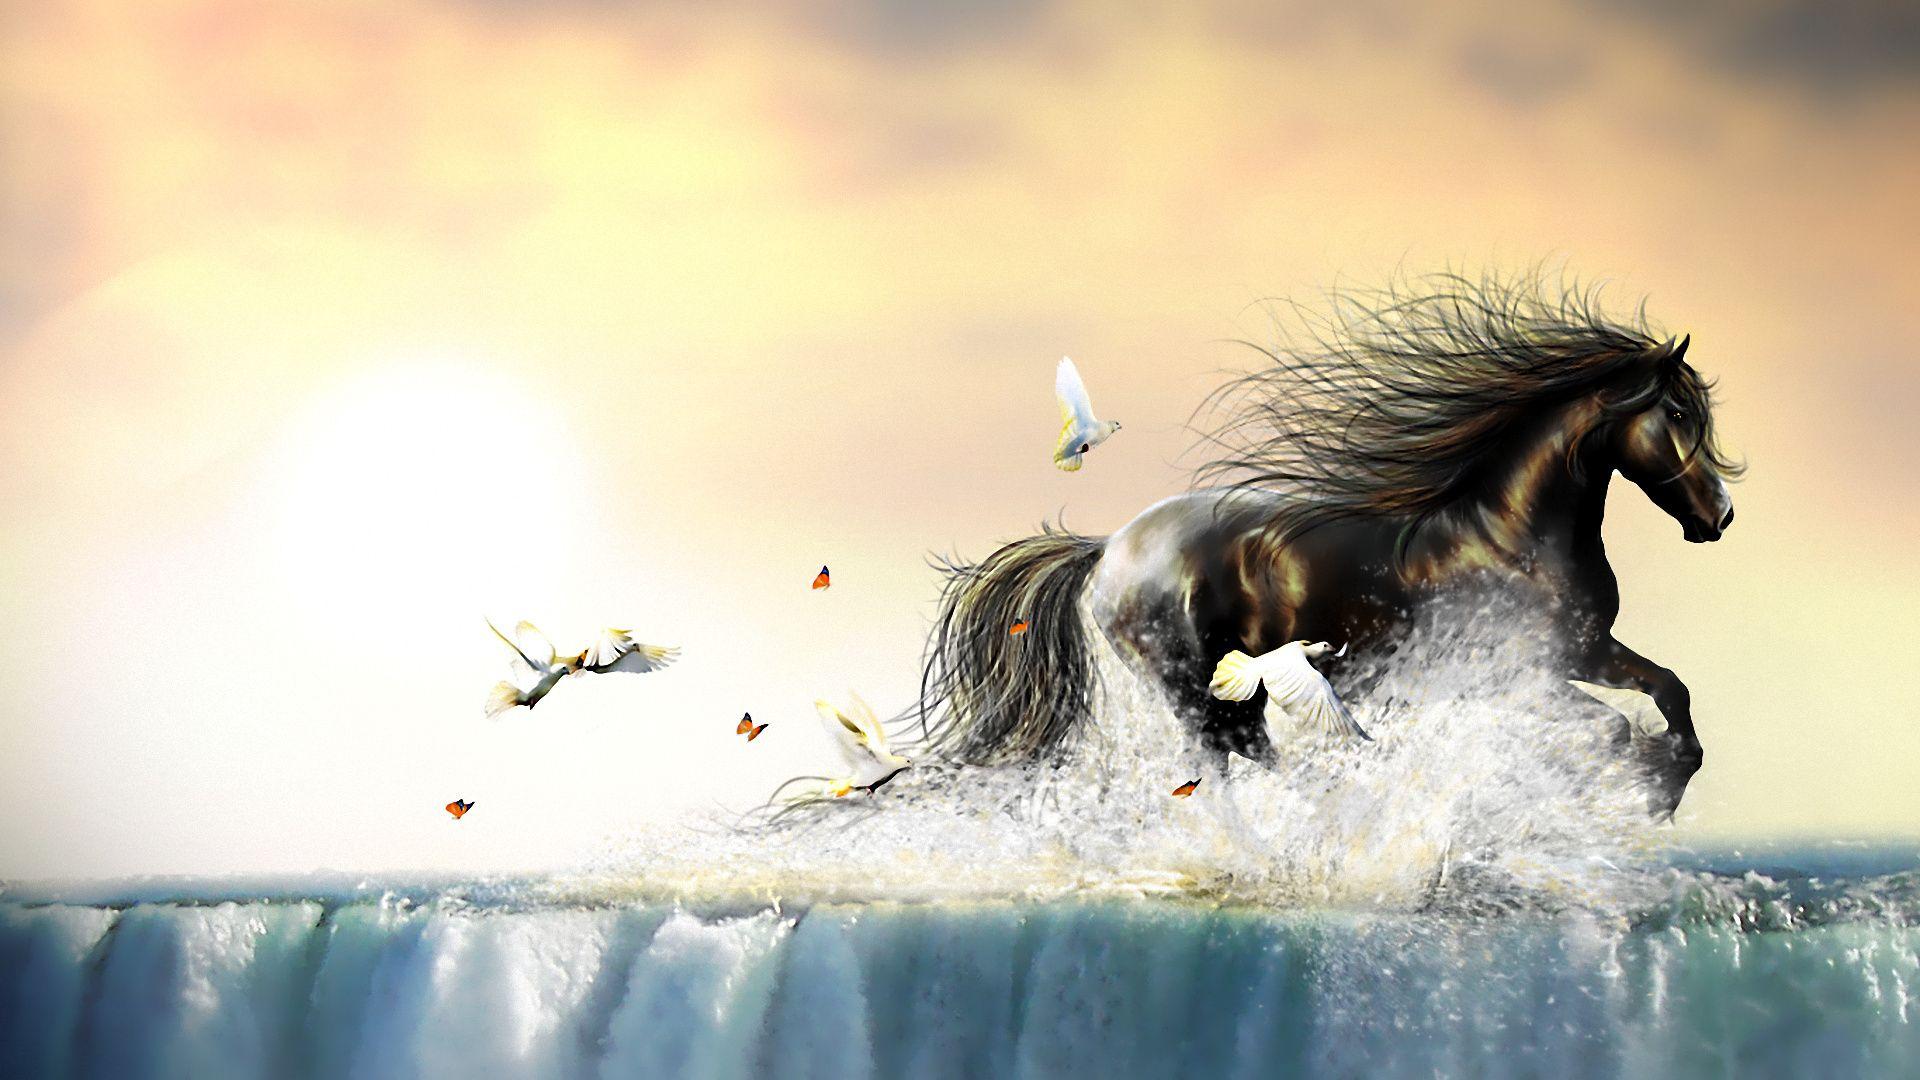 White Horse Unicorn Fantasy Art Wallpaper Hd  Wallpapers13com